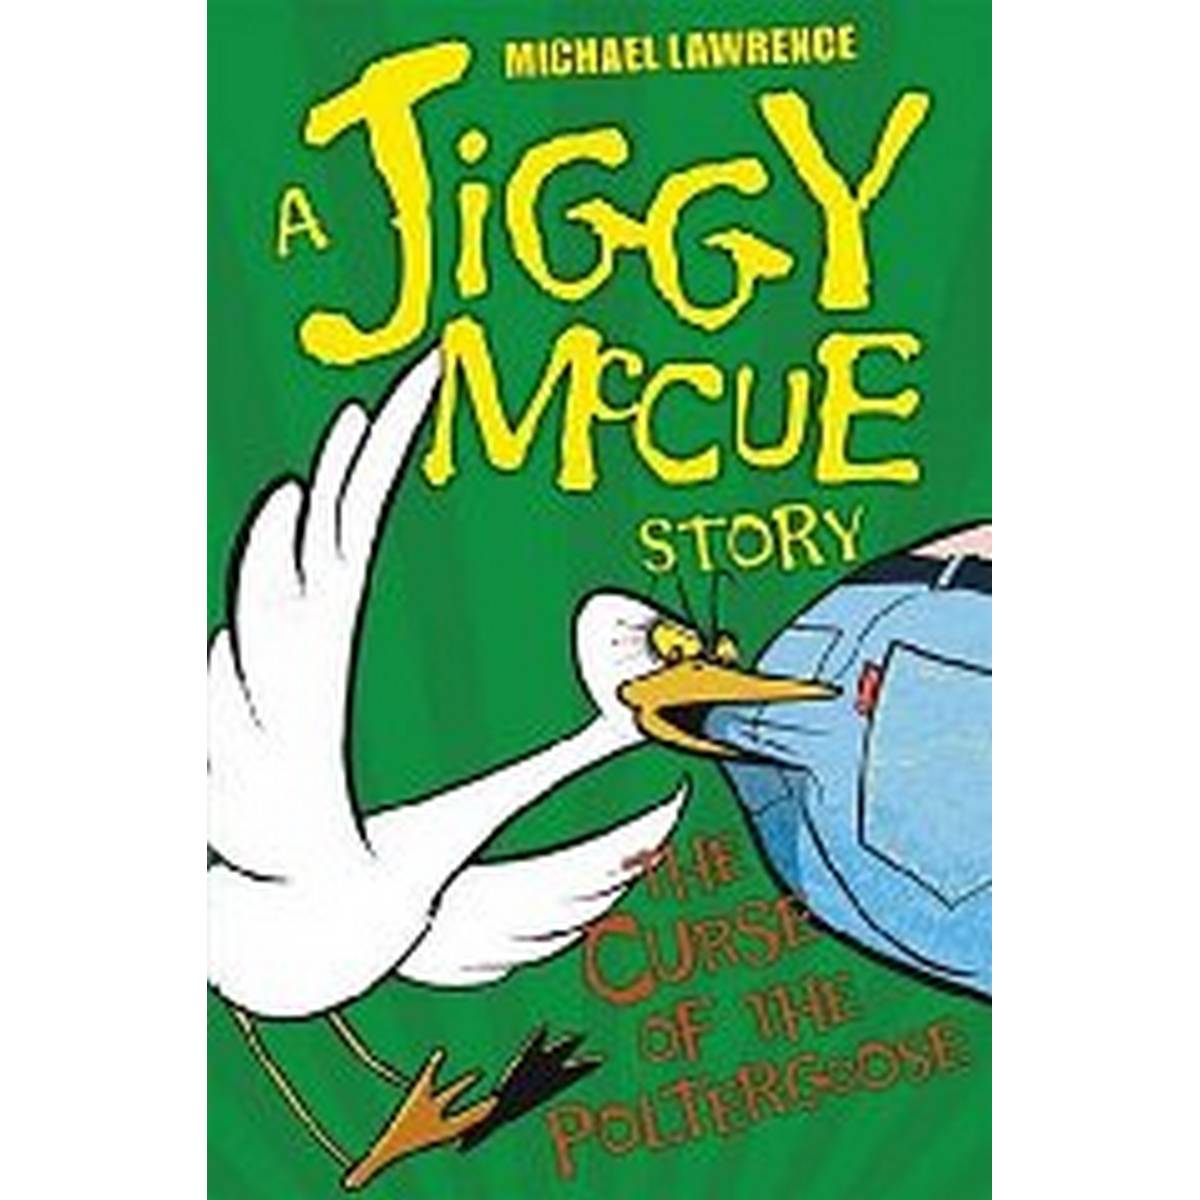 The Curse of the Poltergoose (Jiggy McCue)